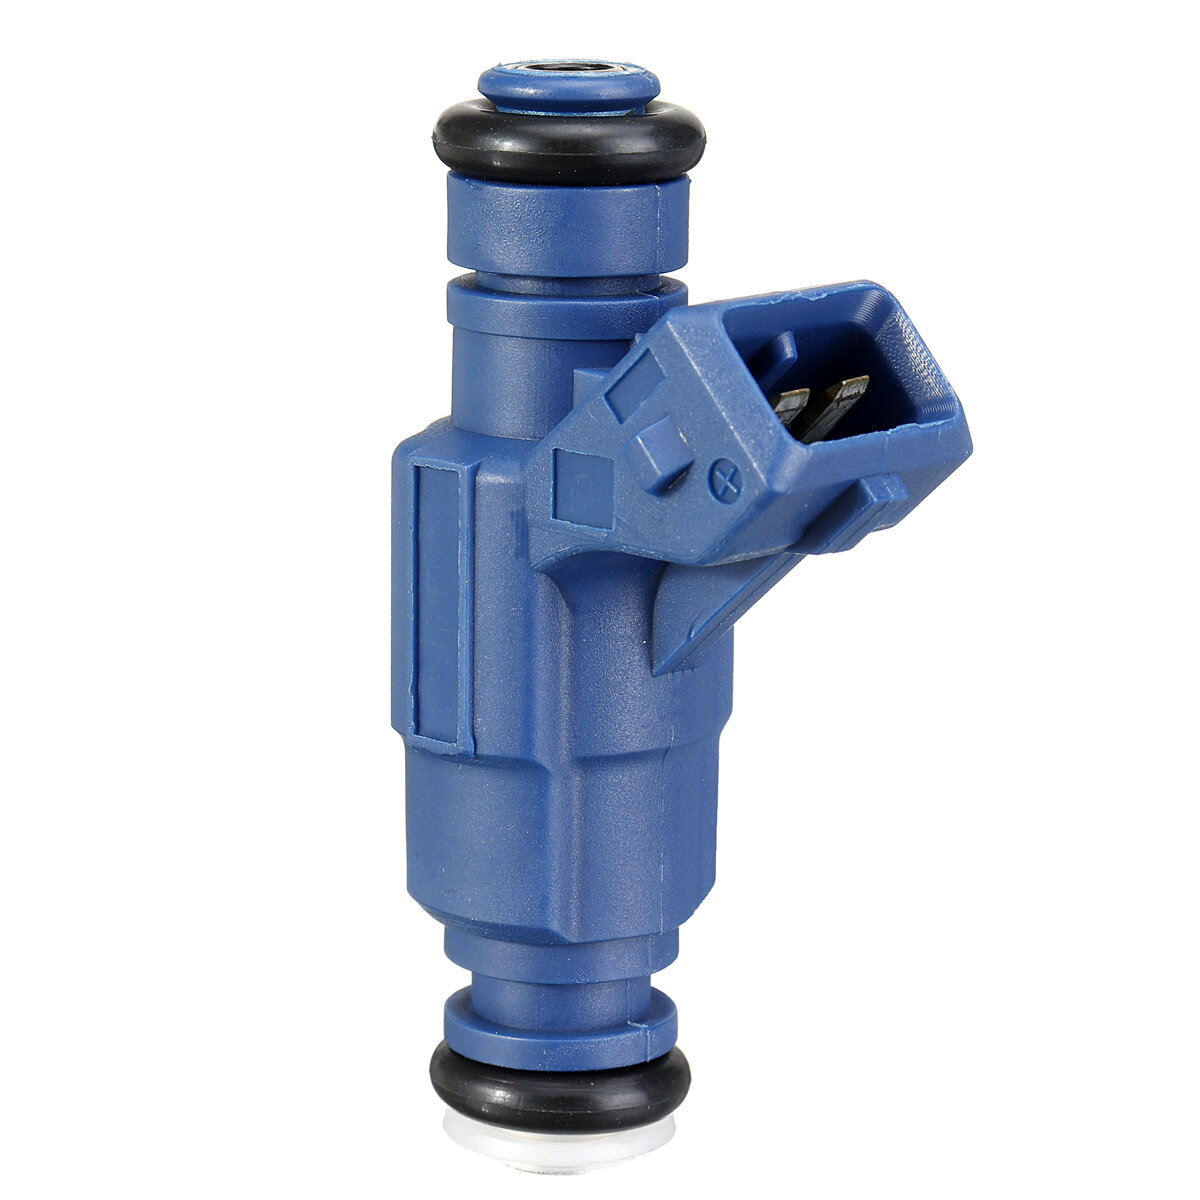 

2Pcs Fuel Injector Blue 0280156208 For Polaris RZR Sportsman Ranger EFI 700 800